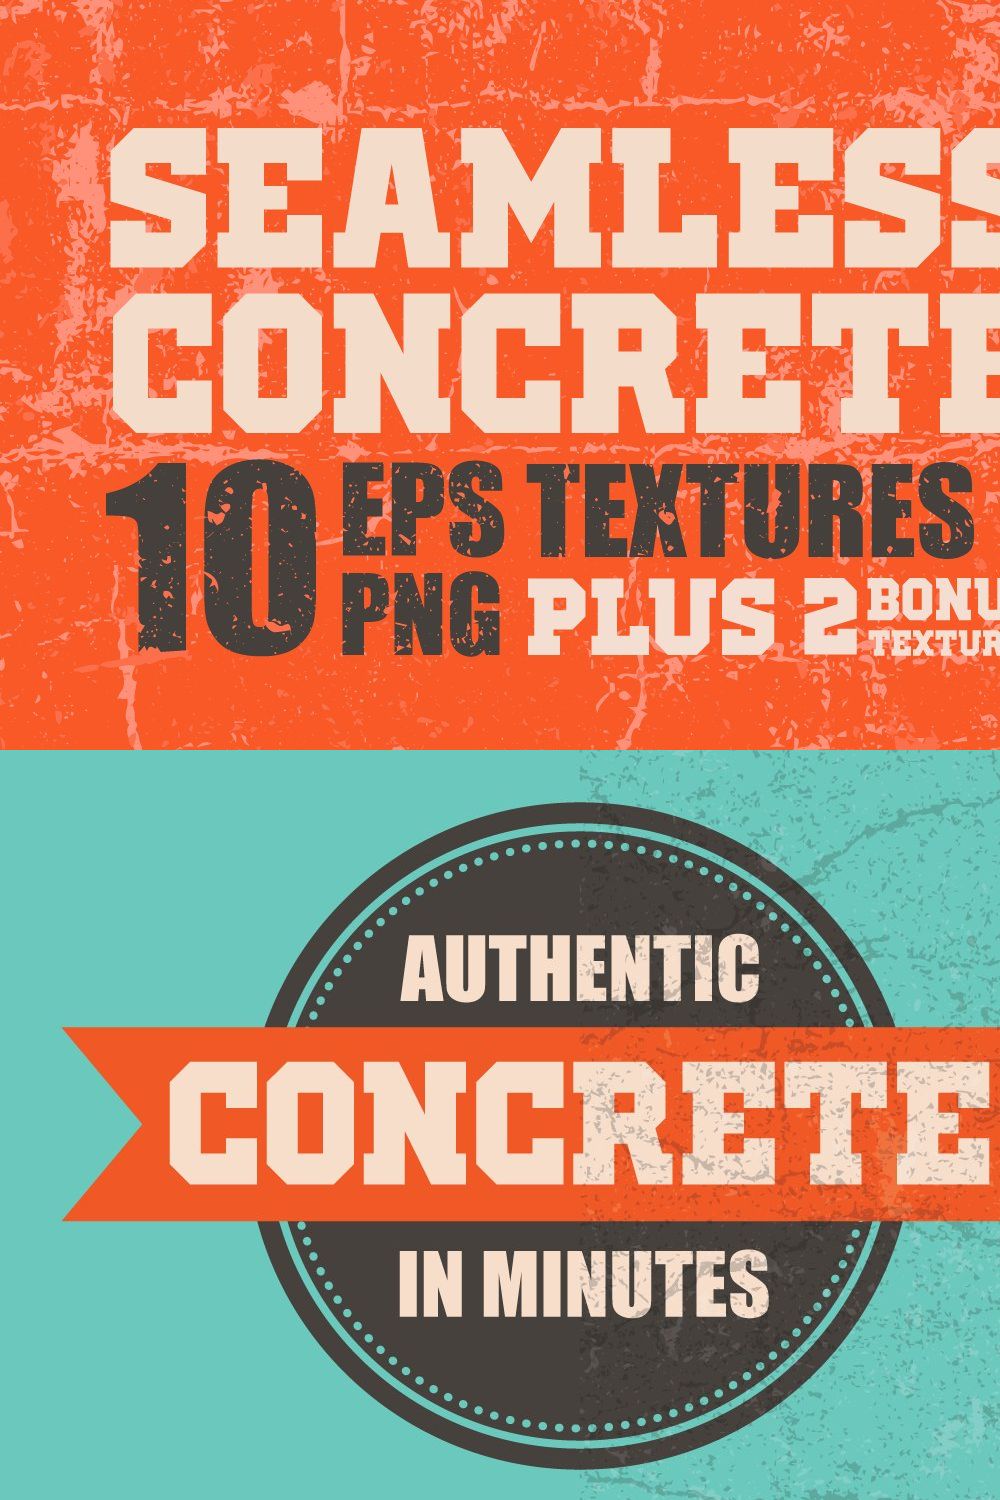 Seamless Concrete Textures pinterest preview image.